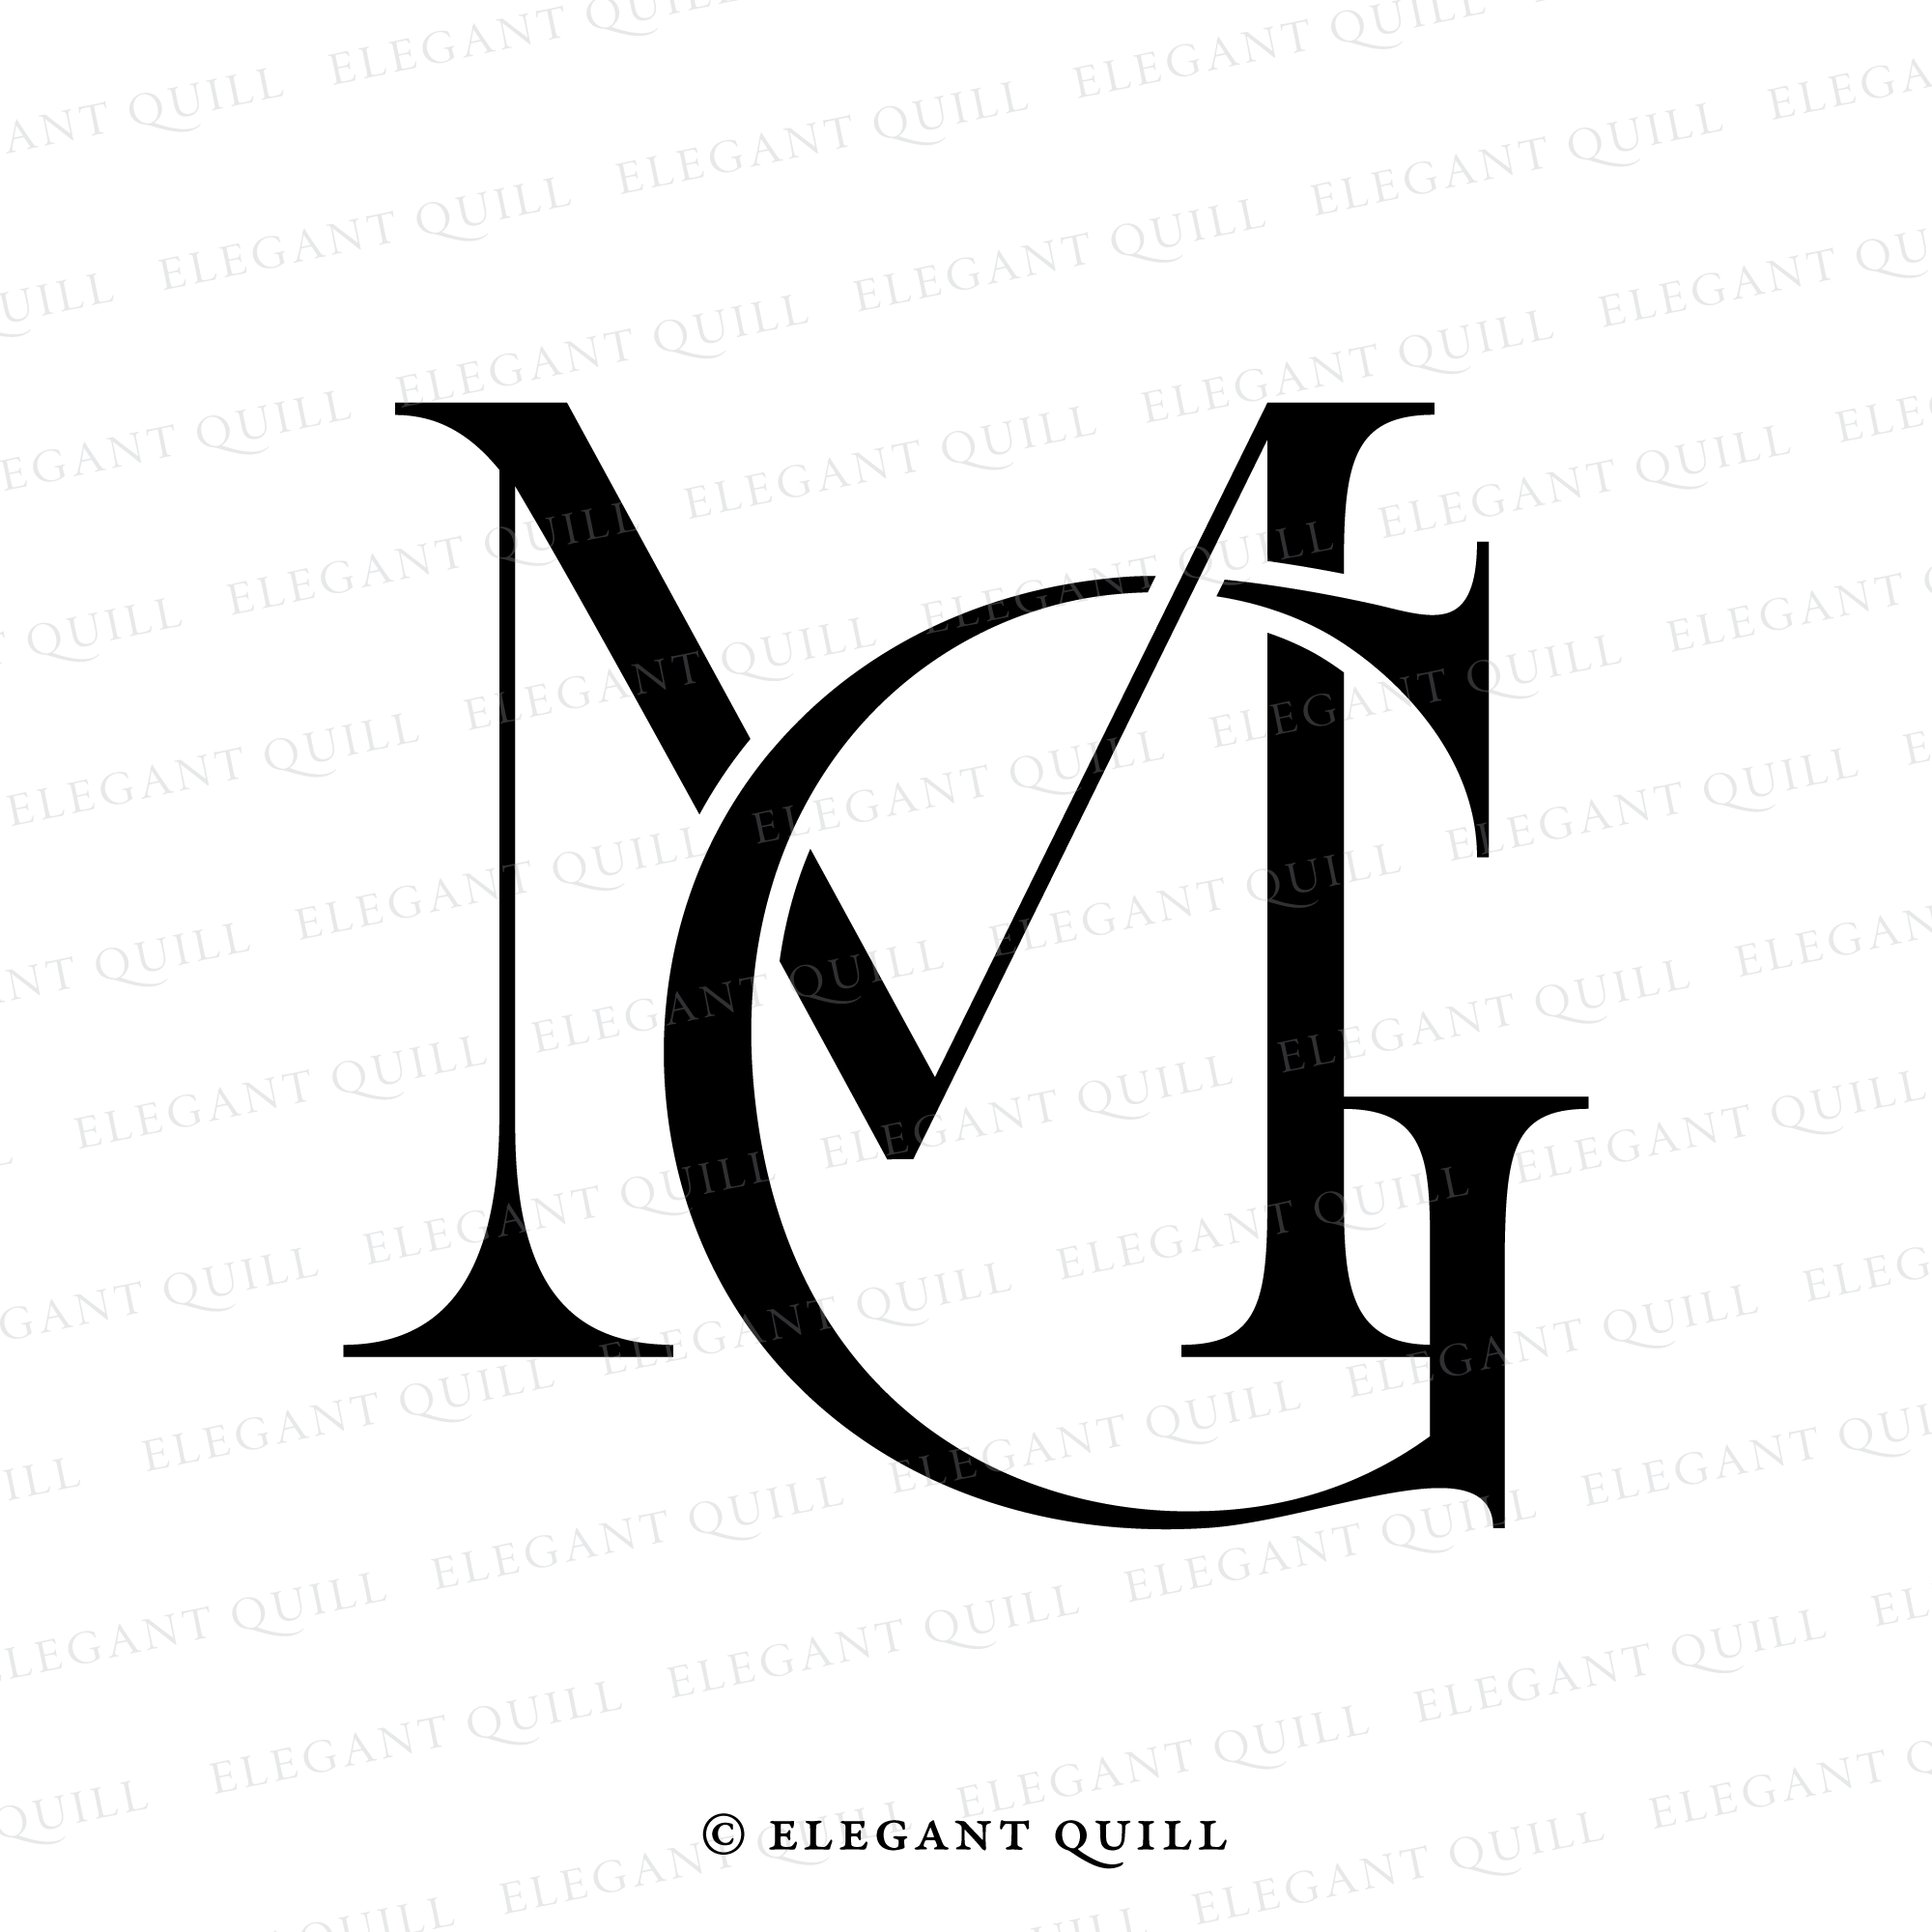 Gm initials letter wedding monogram logos Vector Image